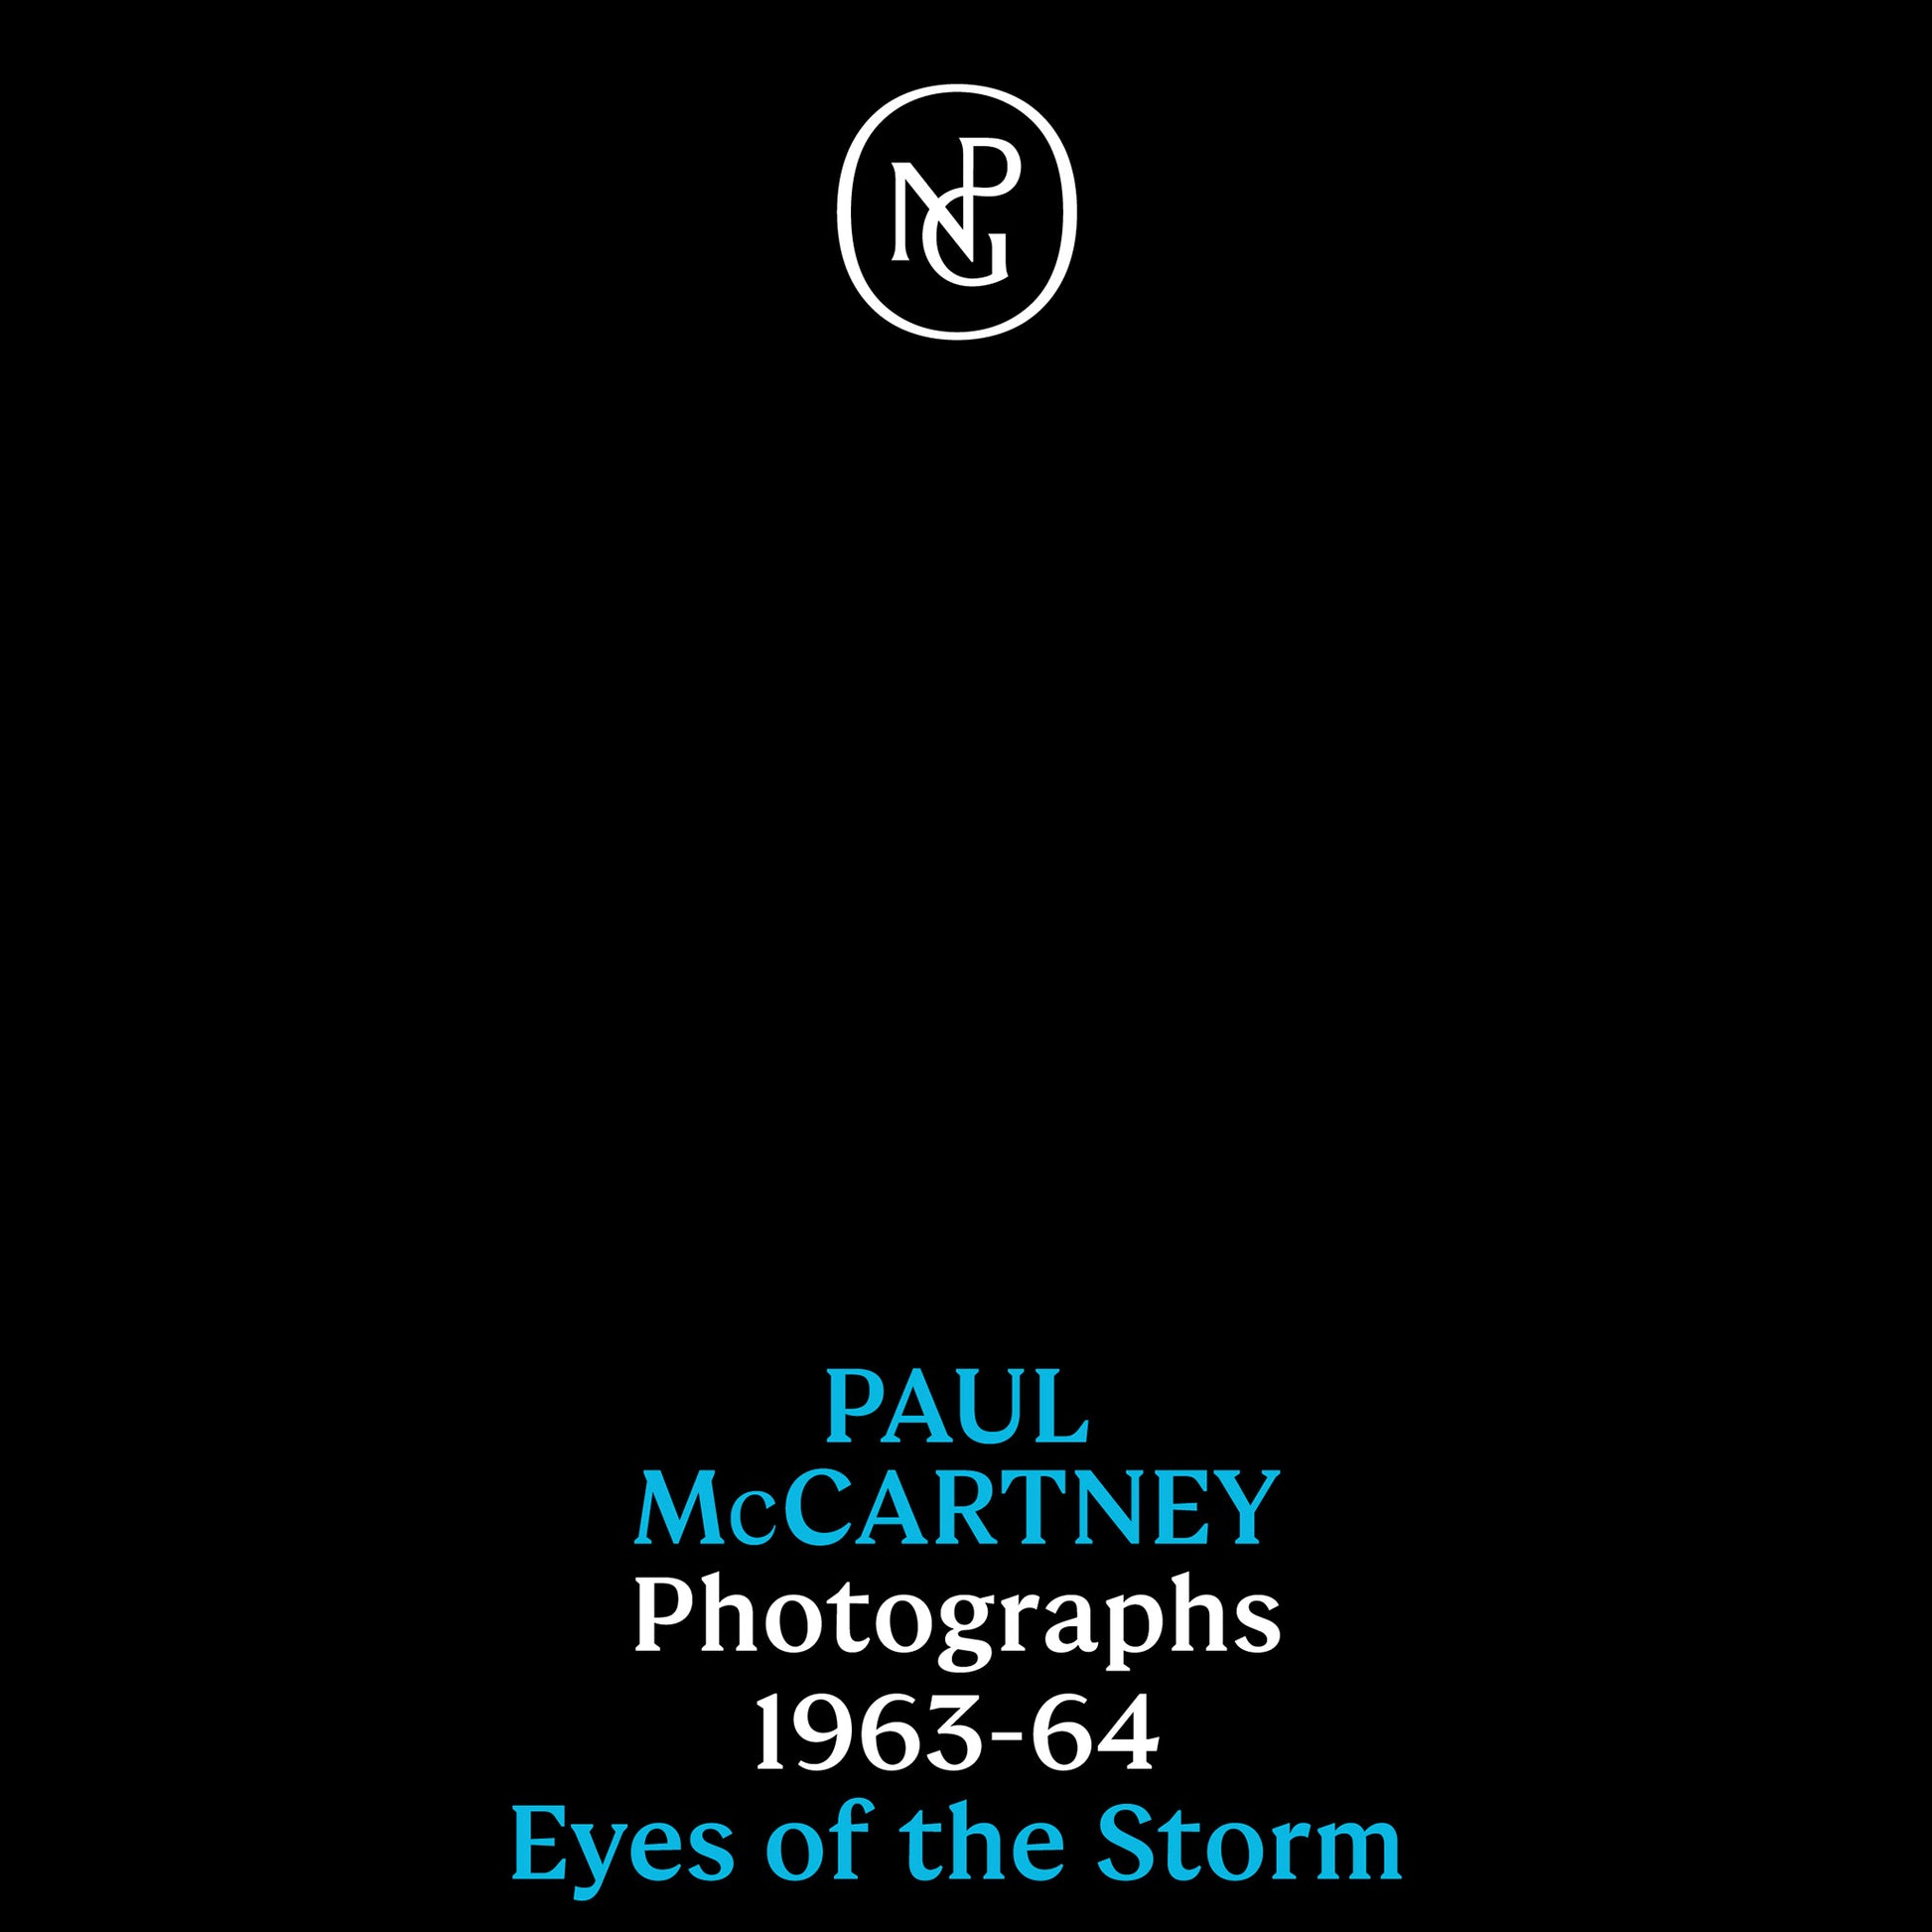 Paul McCartney "Eyes of the Storm" Tote Bag - Chrysler Museum Shop